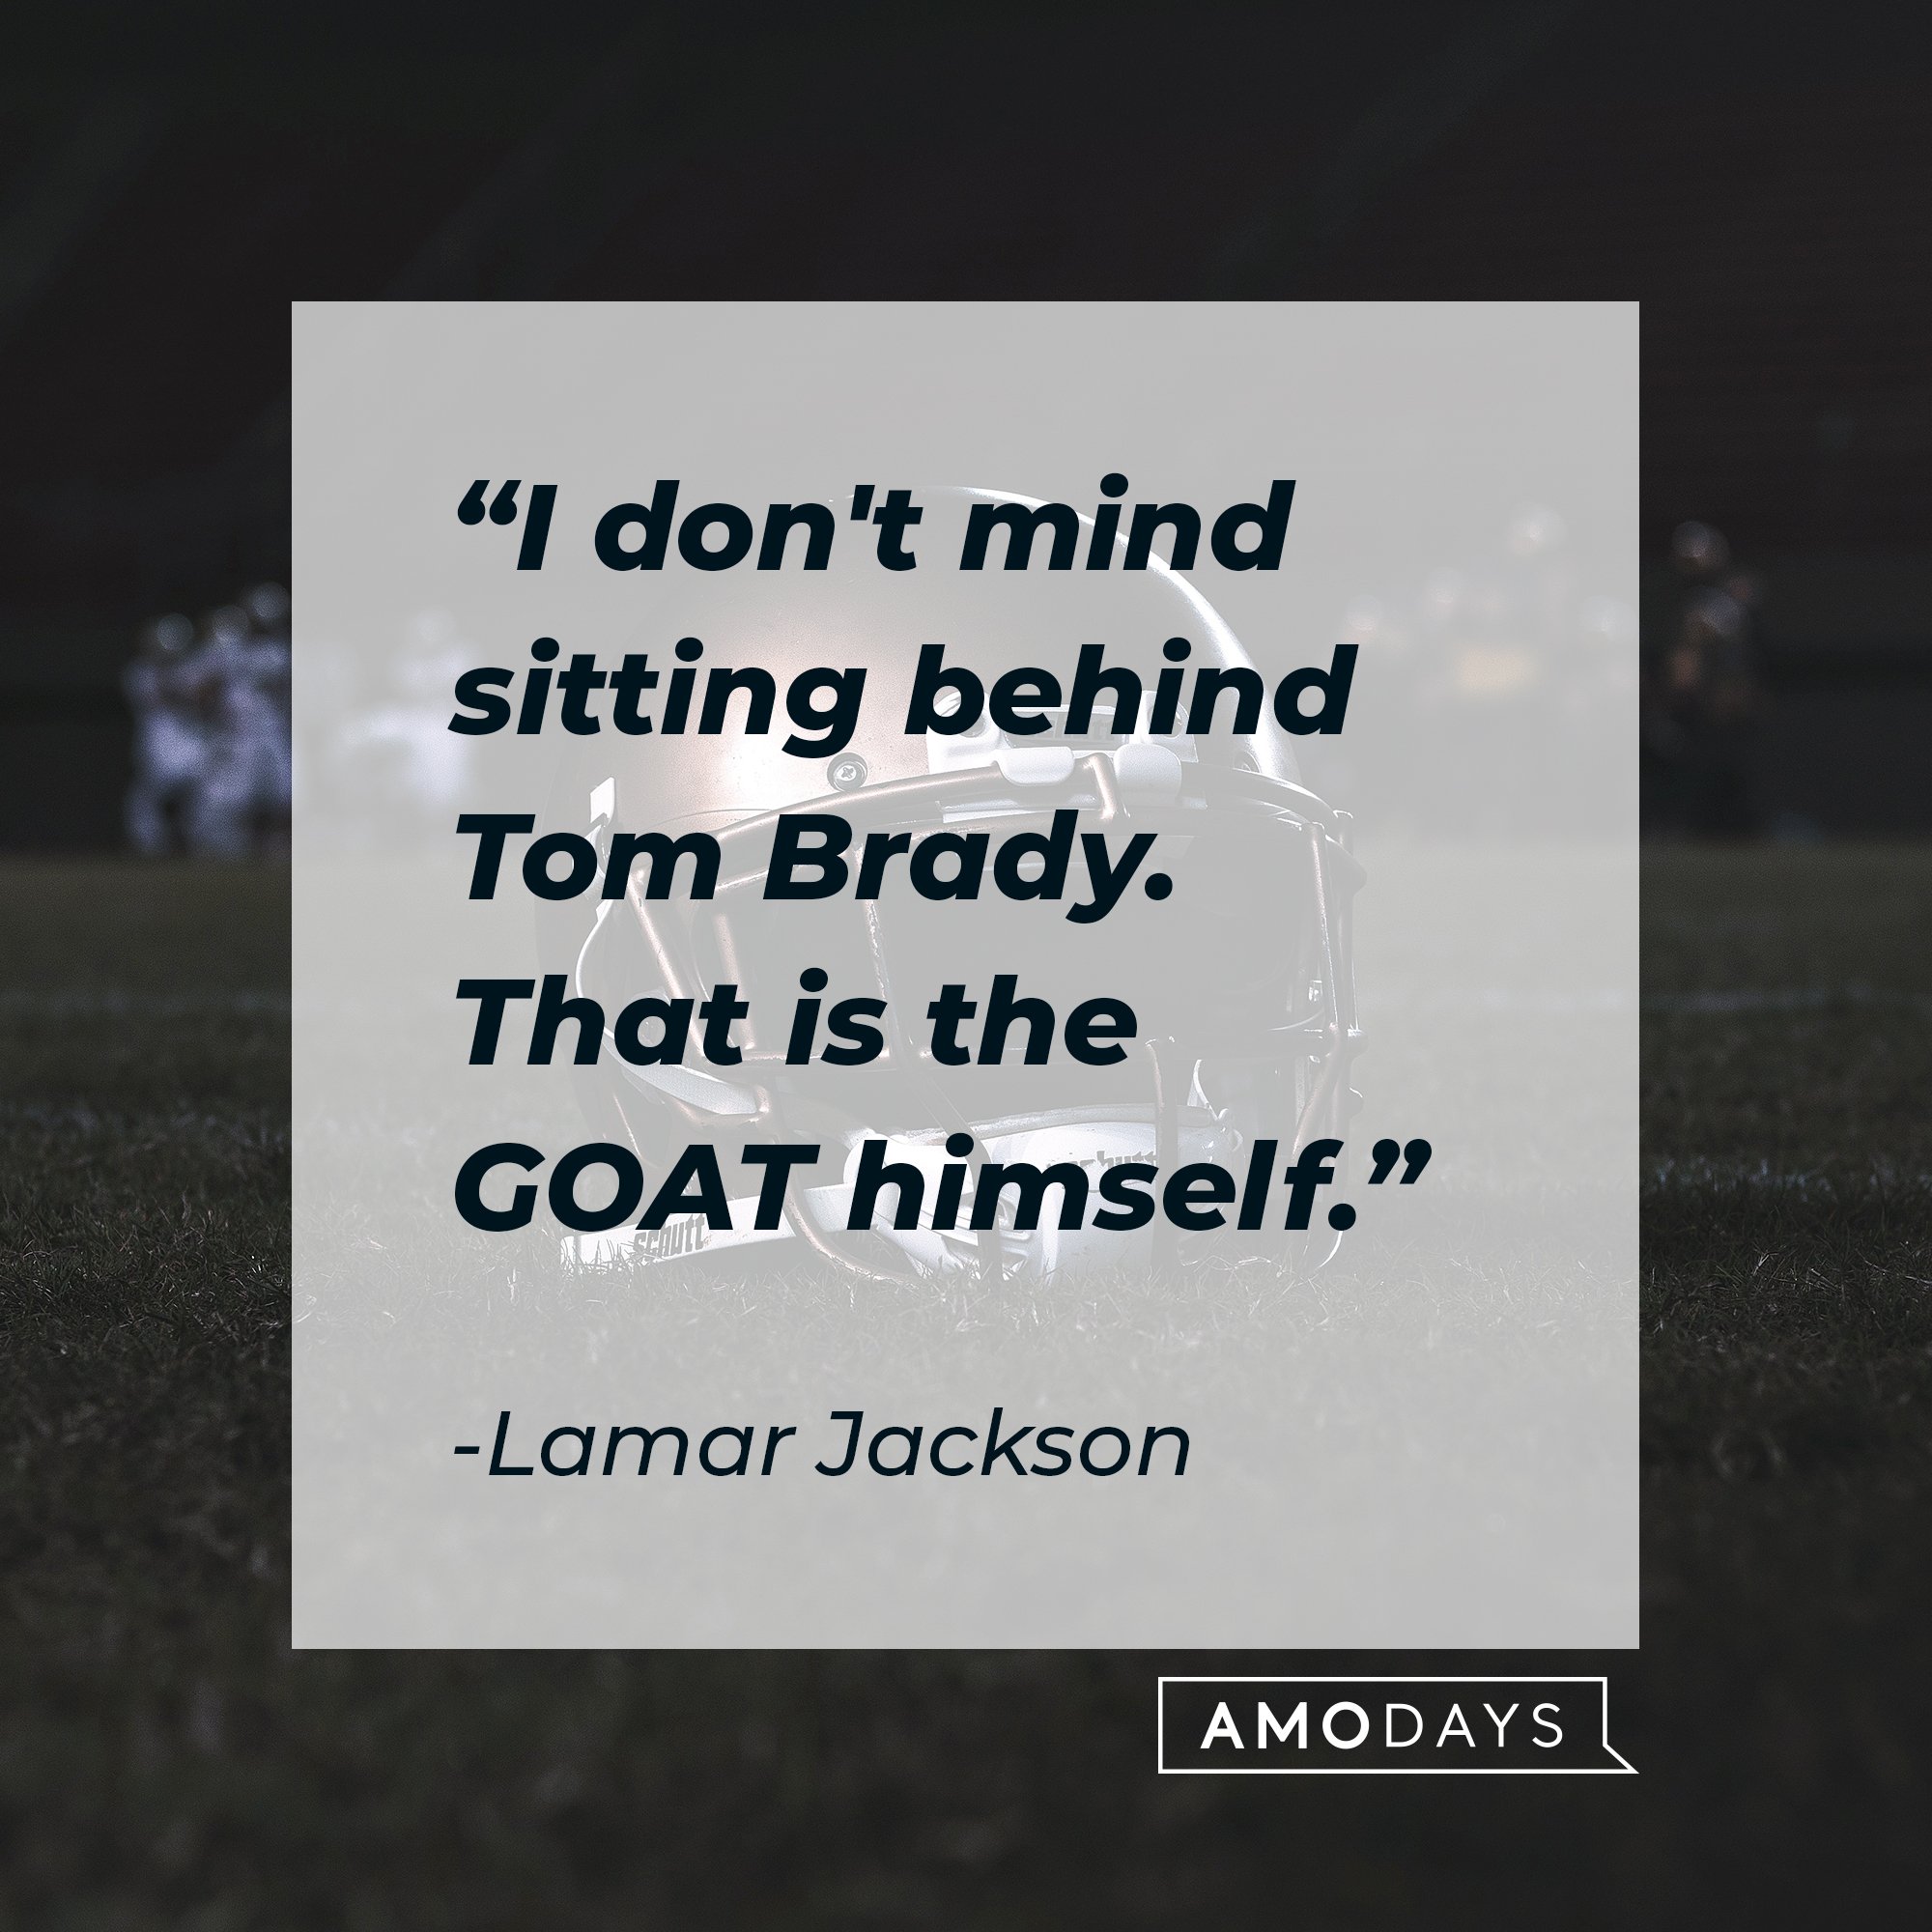 Lamar Jackson’s quote: "I don't mind sitting behind Tom Brady. That is the GOAT himself." | Image: AmoDays 